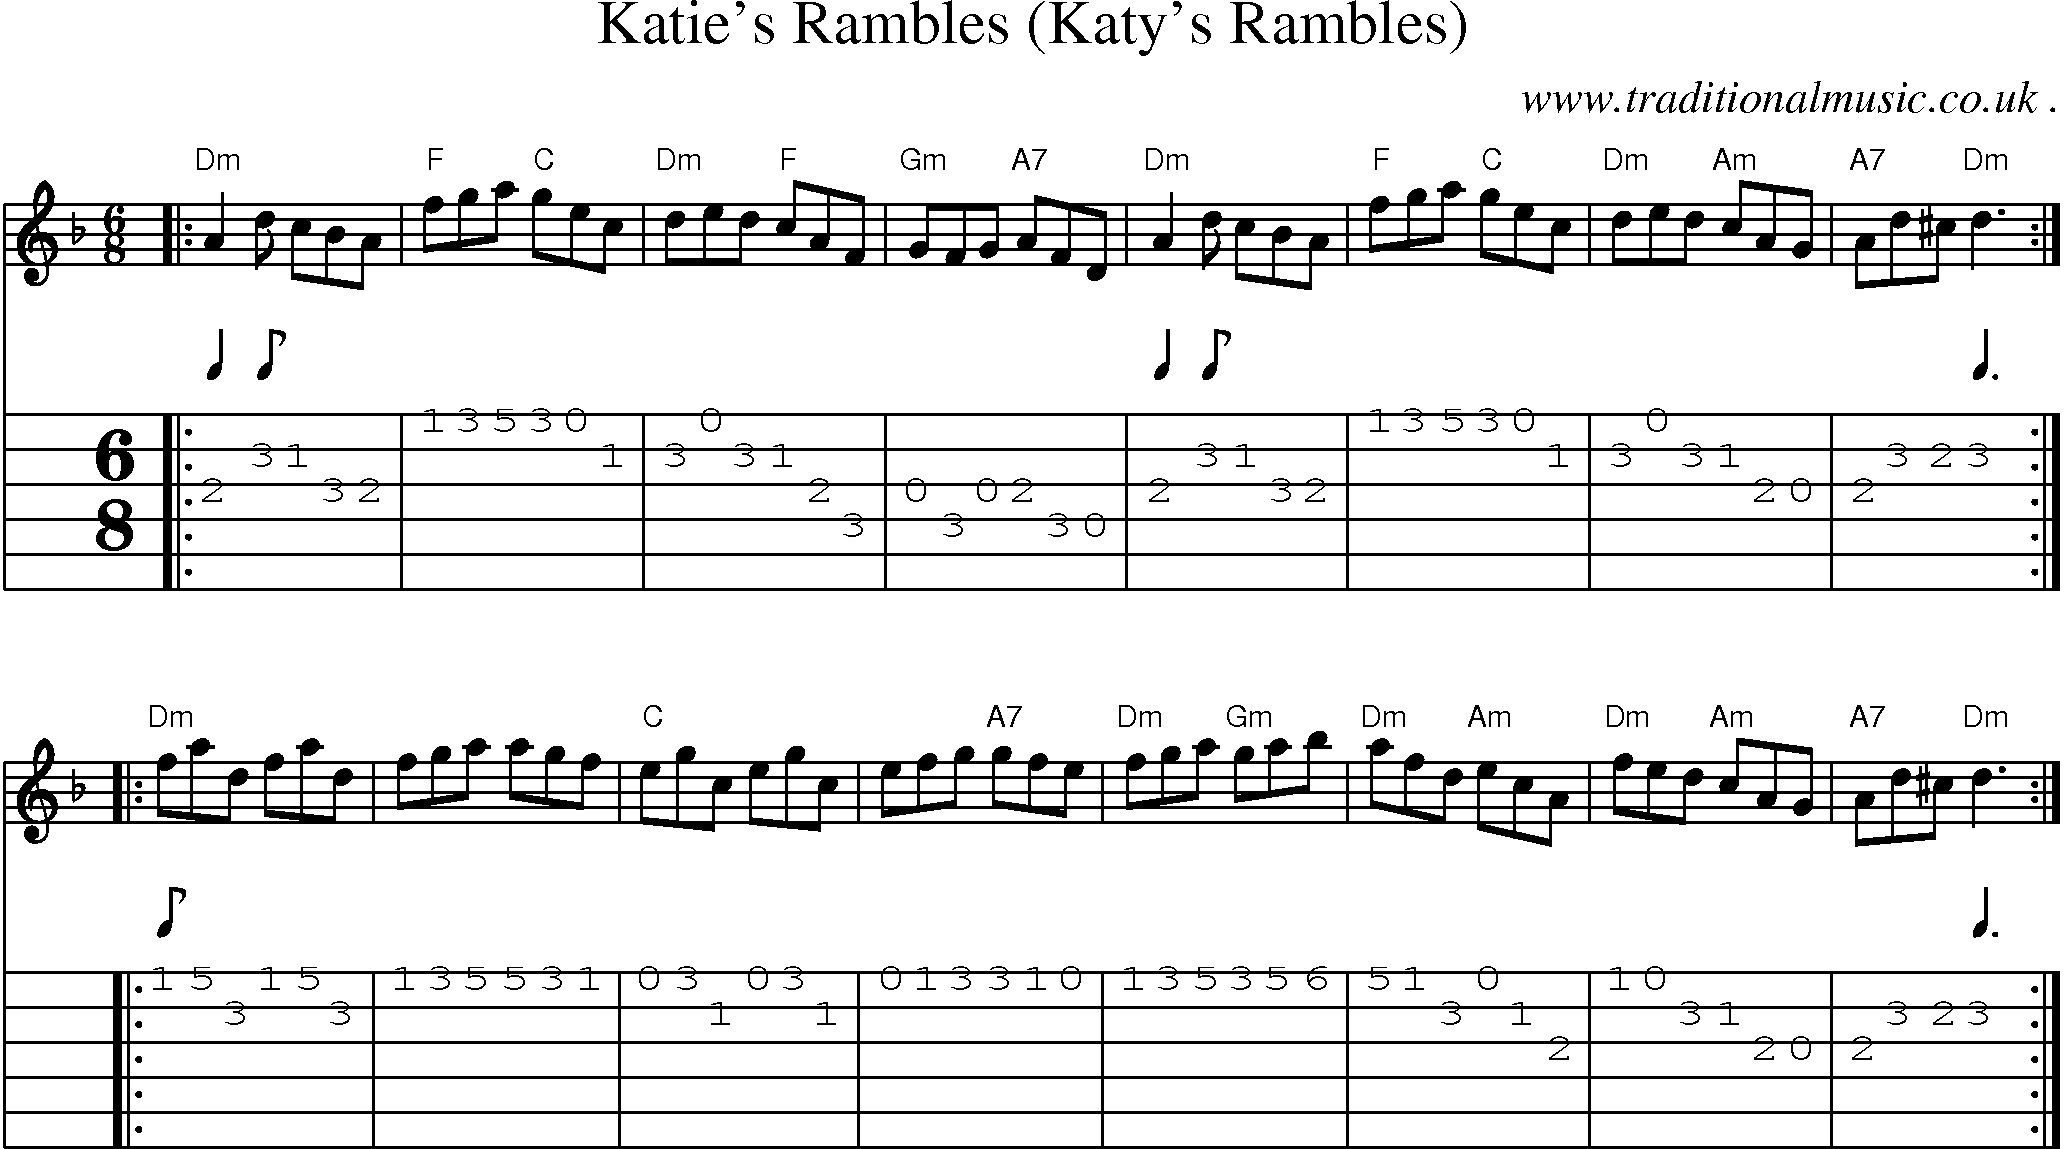 Sheet-music  score, Chords and Guitar Tabs for Katies Rambles Katys Rambles